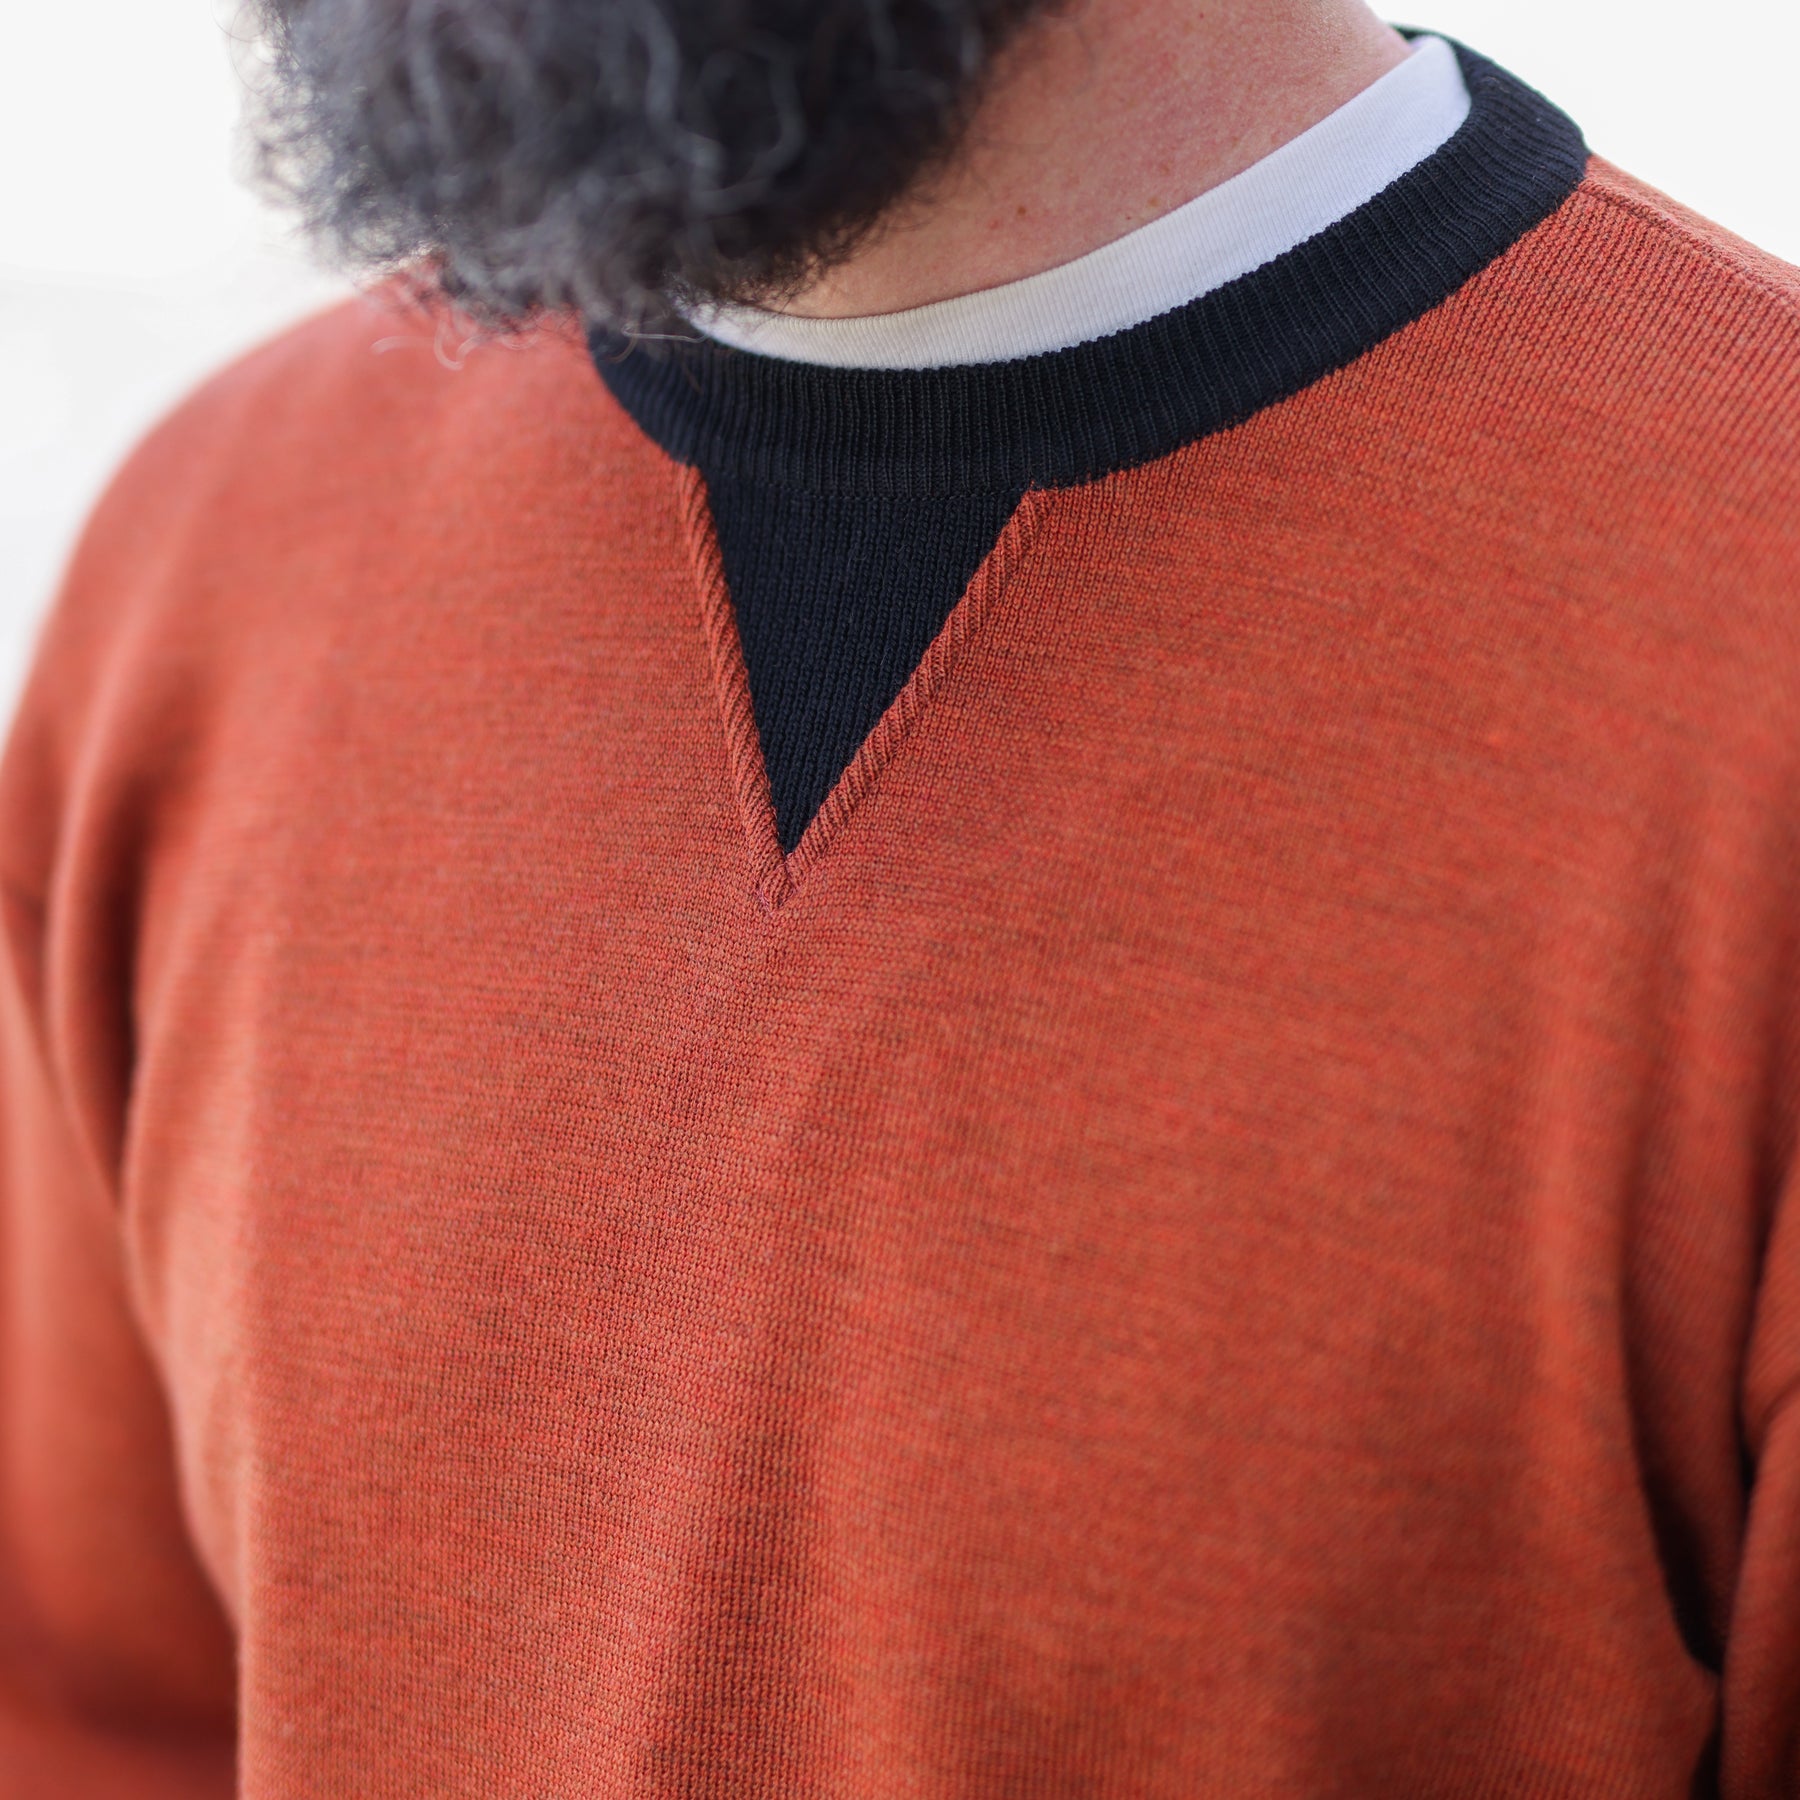 Stevenson Overall Co. V-Gusset Wool Knitted Sweat Shirt Orange FINAL SALE